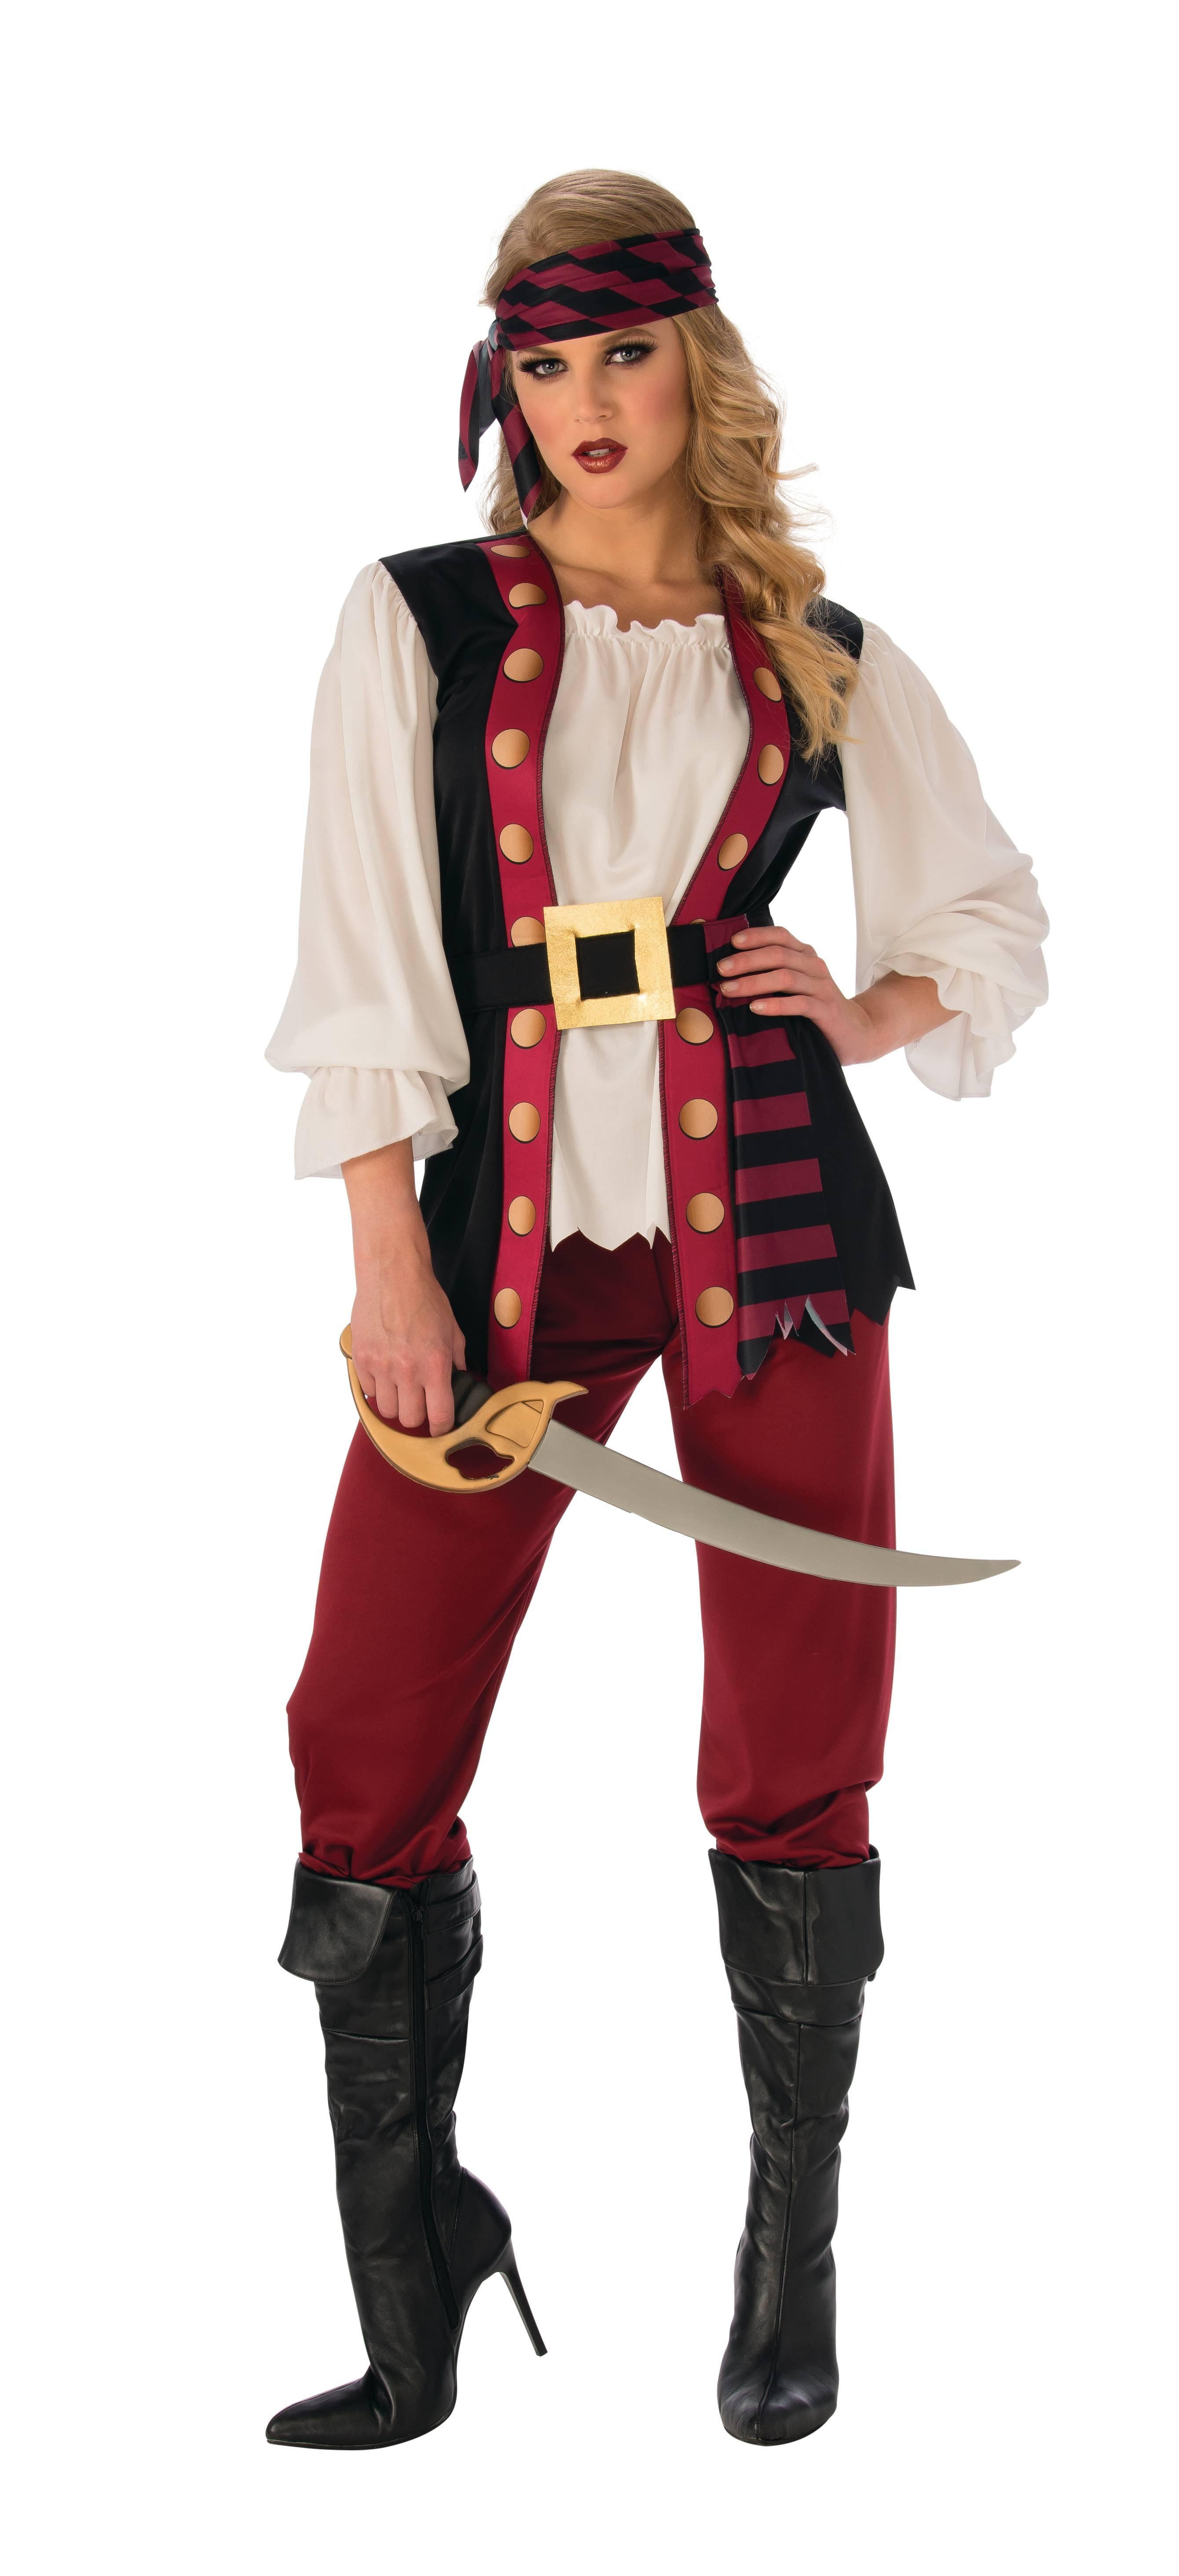 WAY TO CELEBRATE! Women Pirate Halloween Costume Large